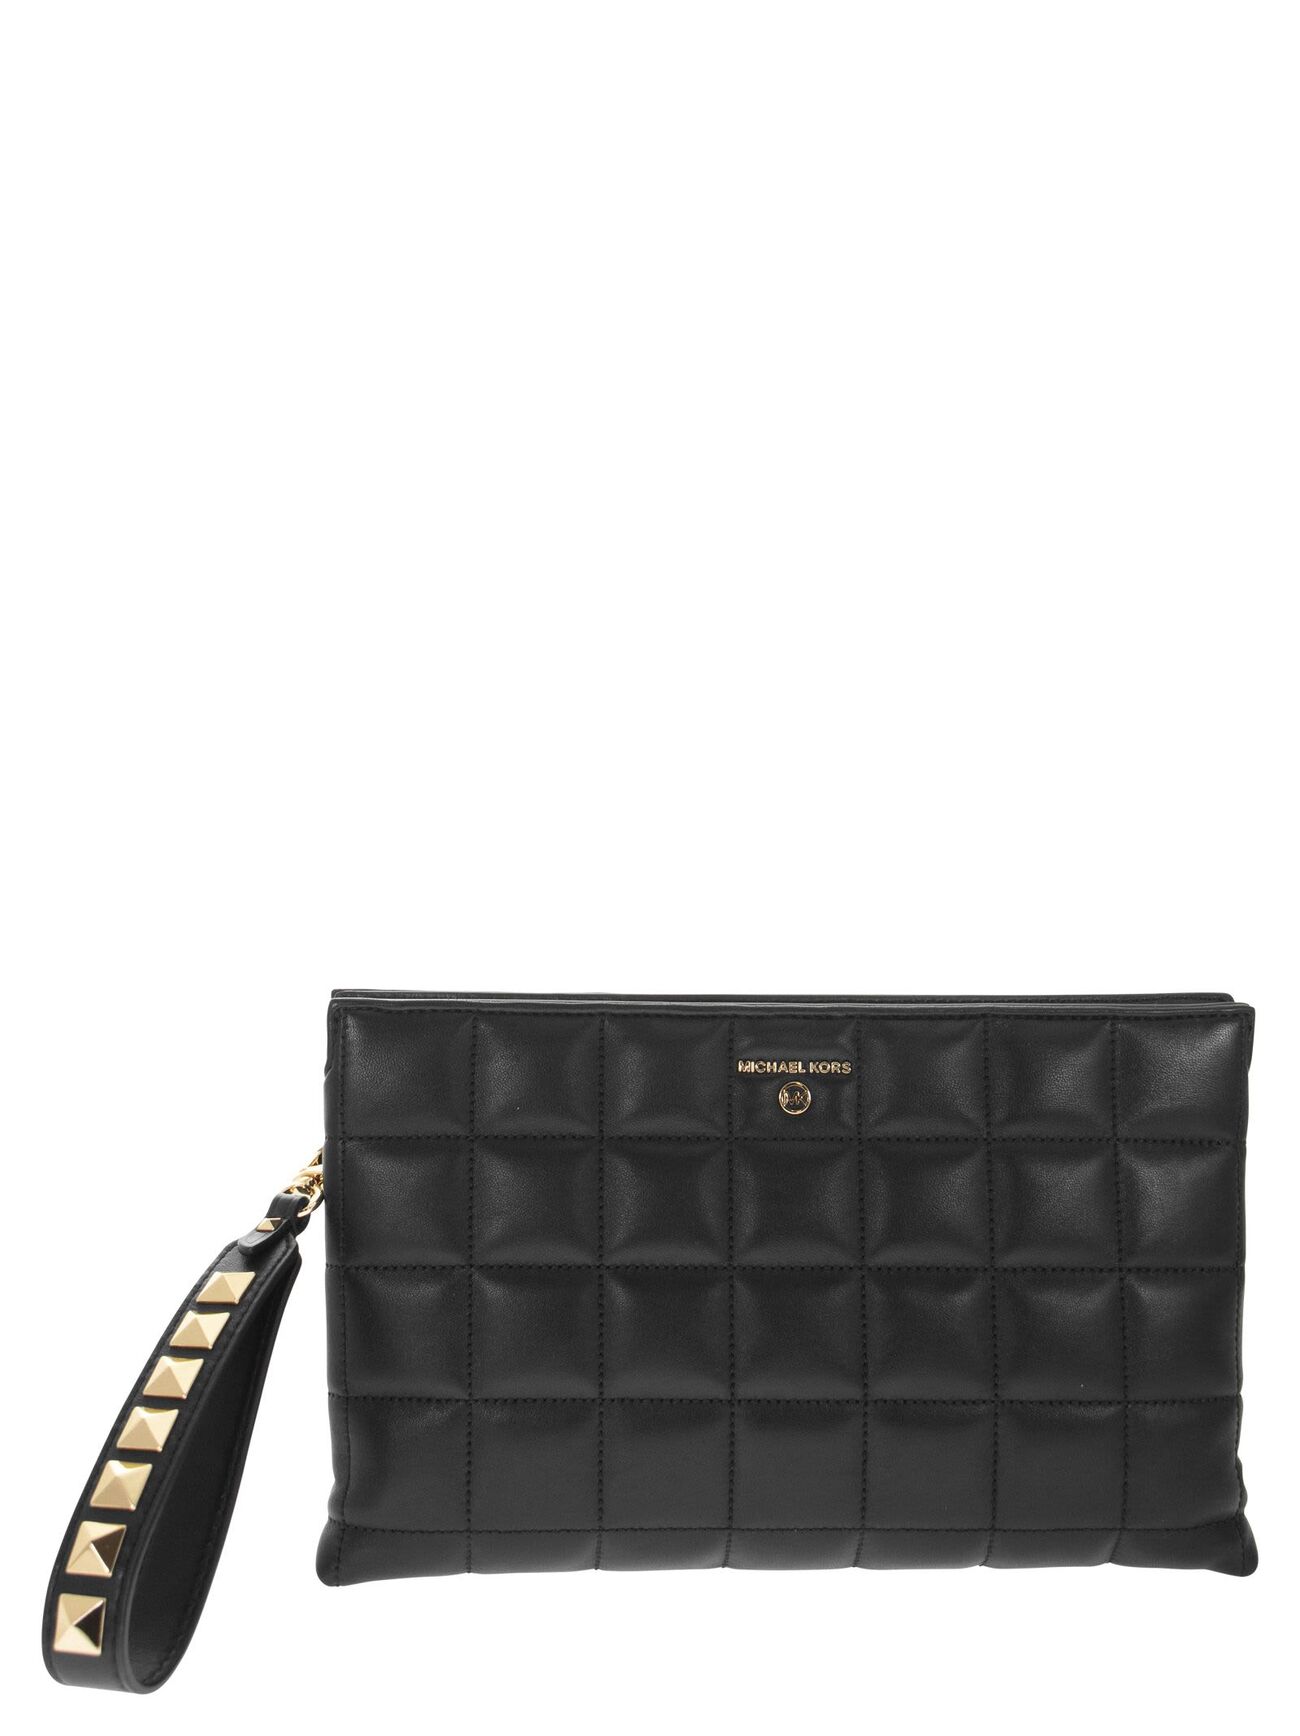 Michael Kors Leather Handbag in black